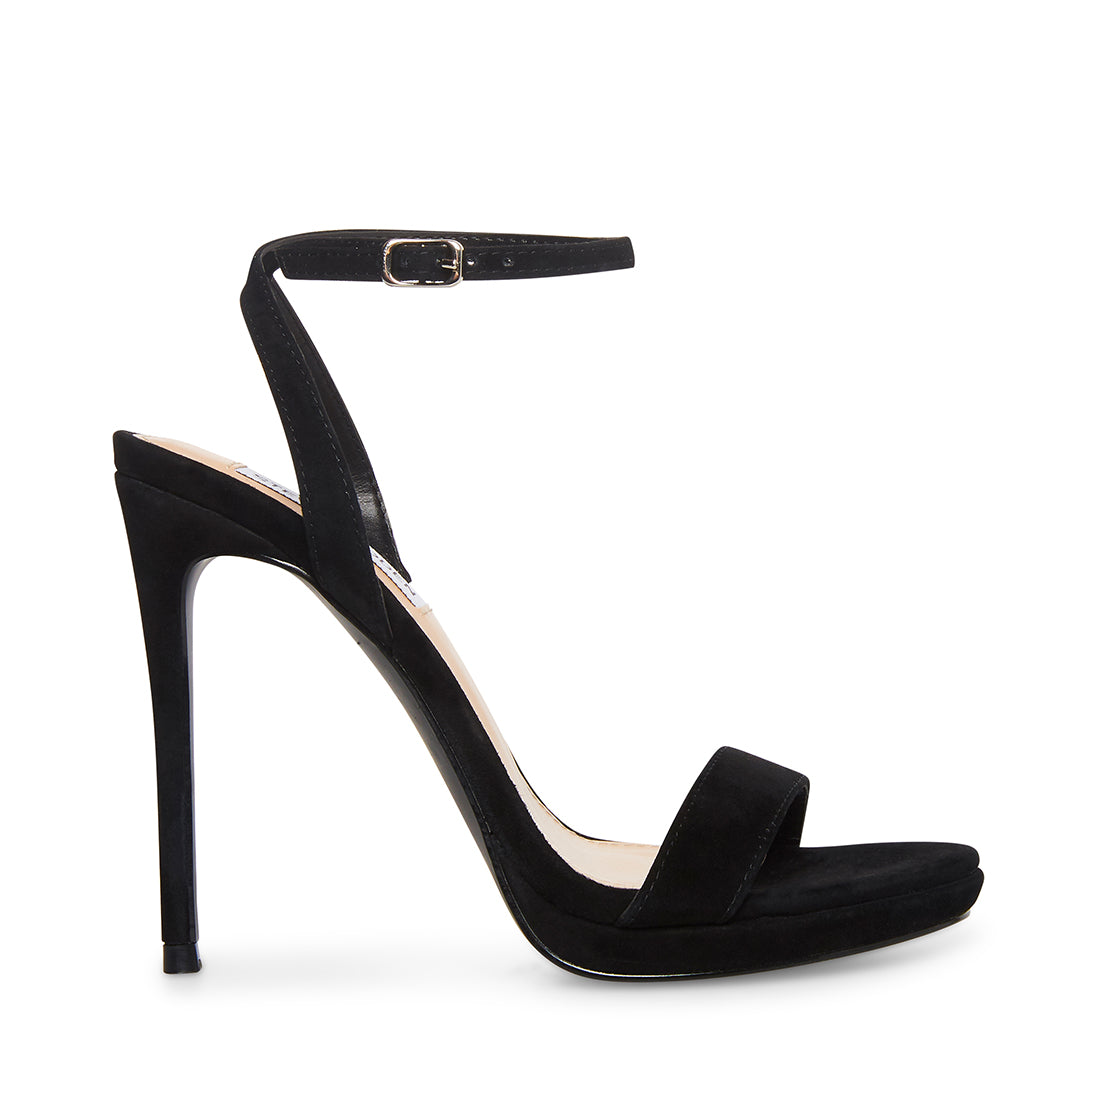 Steve madden kenley heels new size 7.5 | eBay